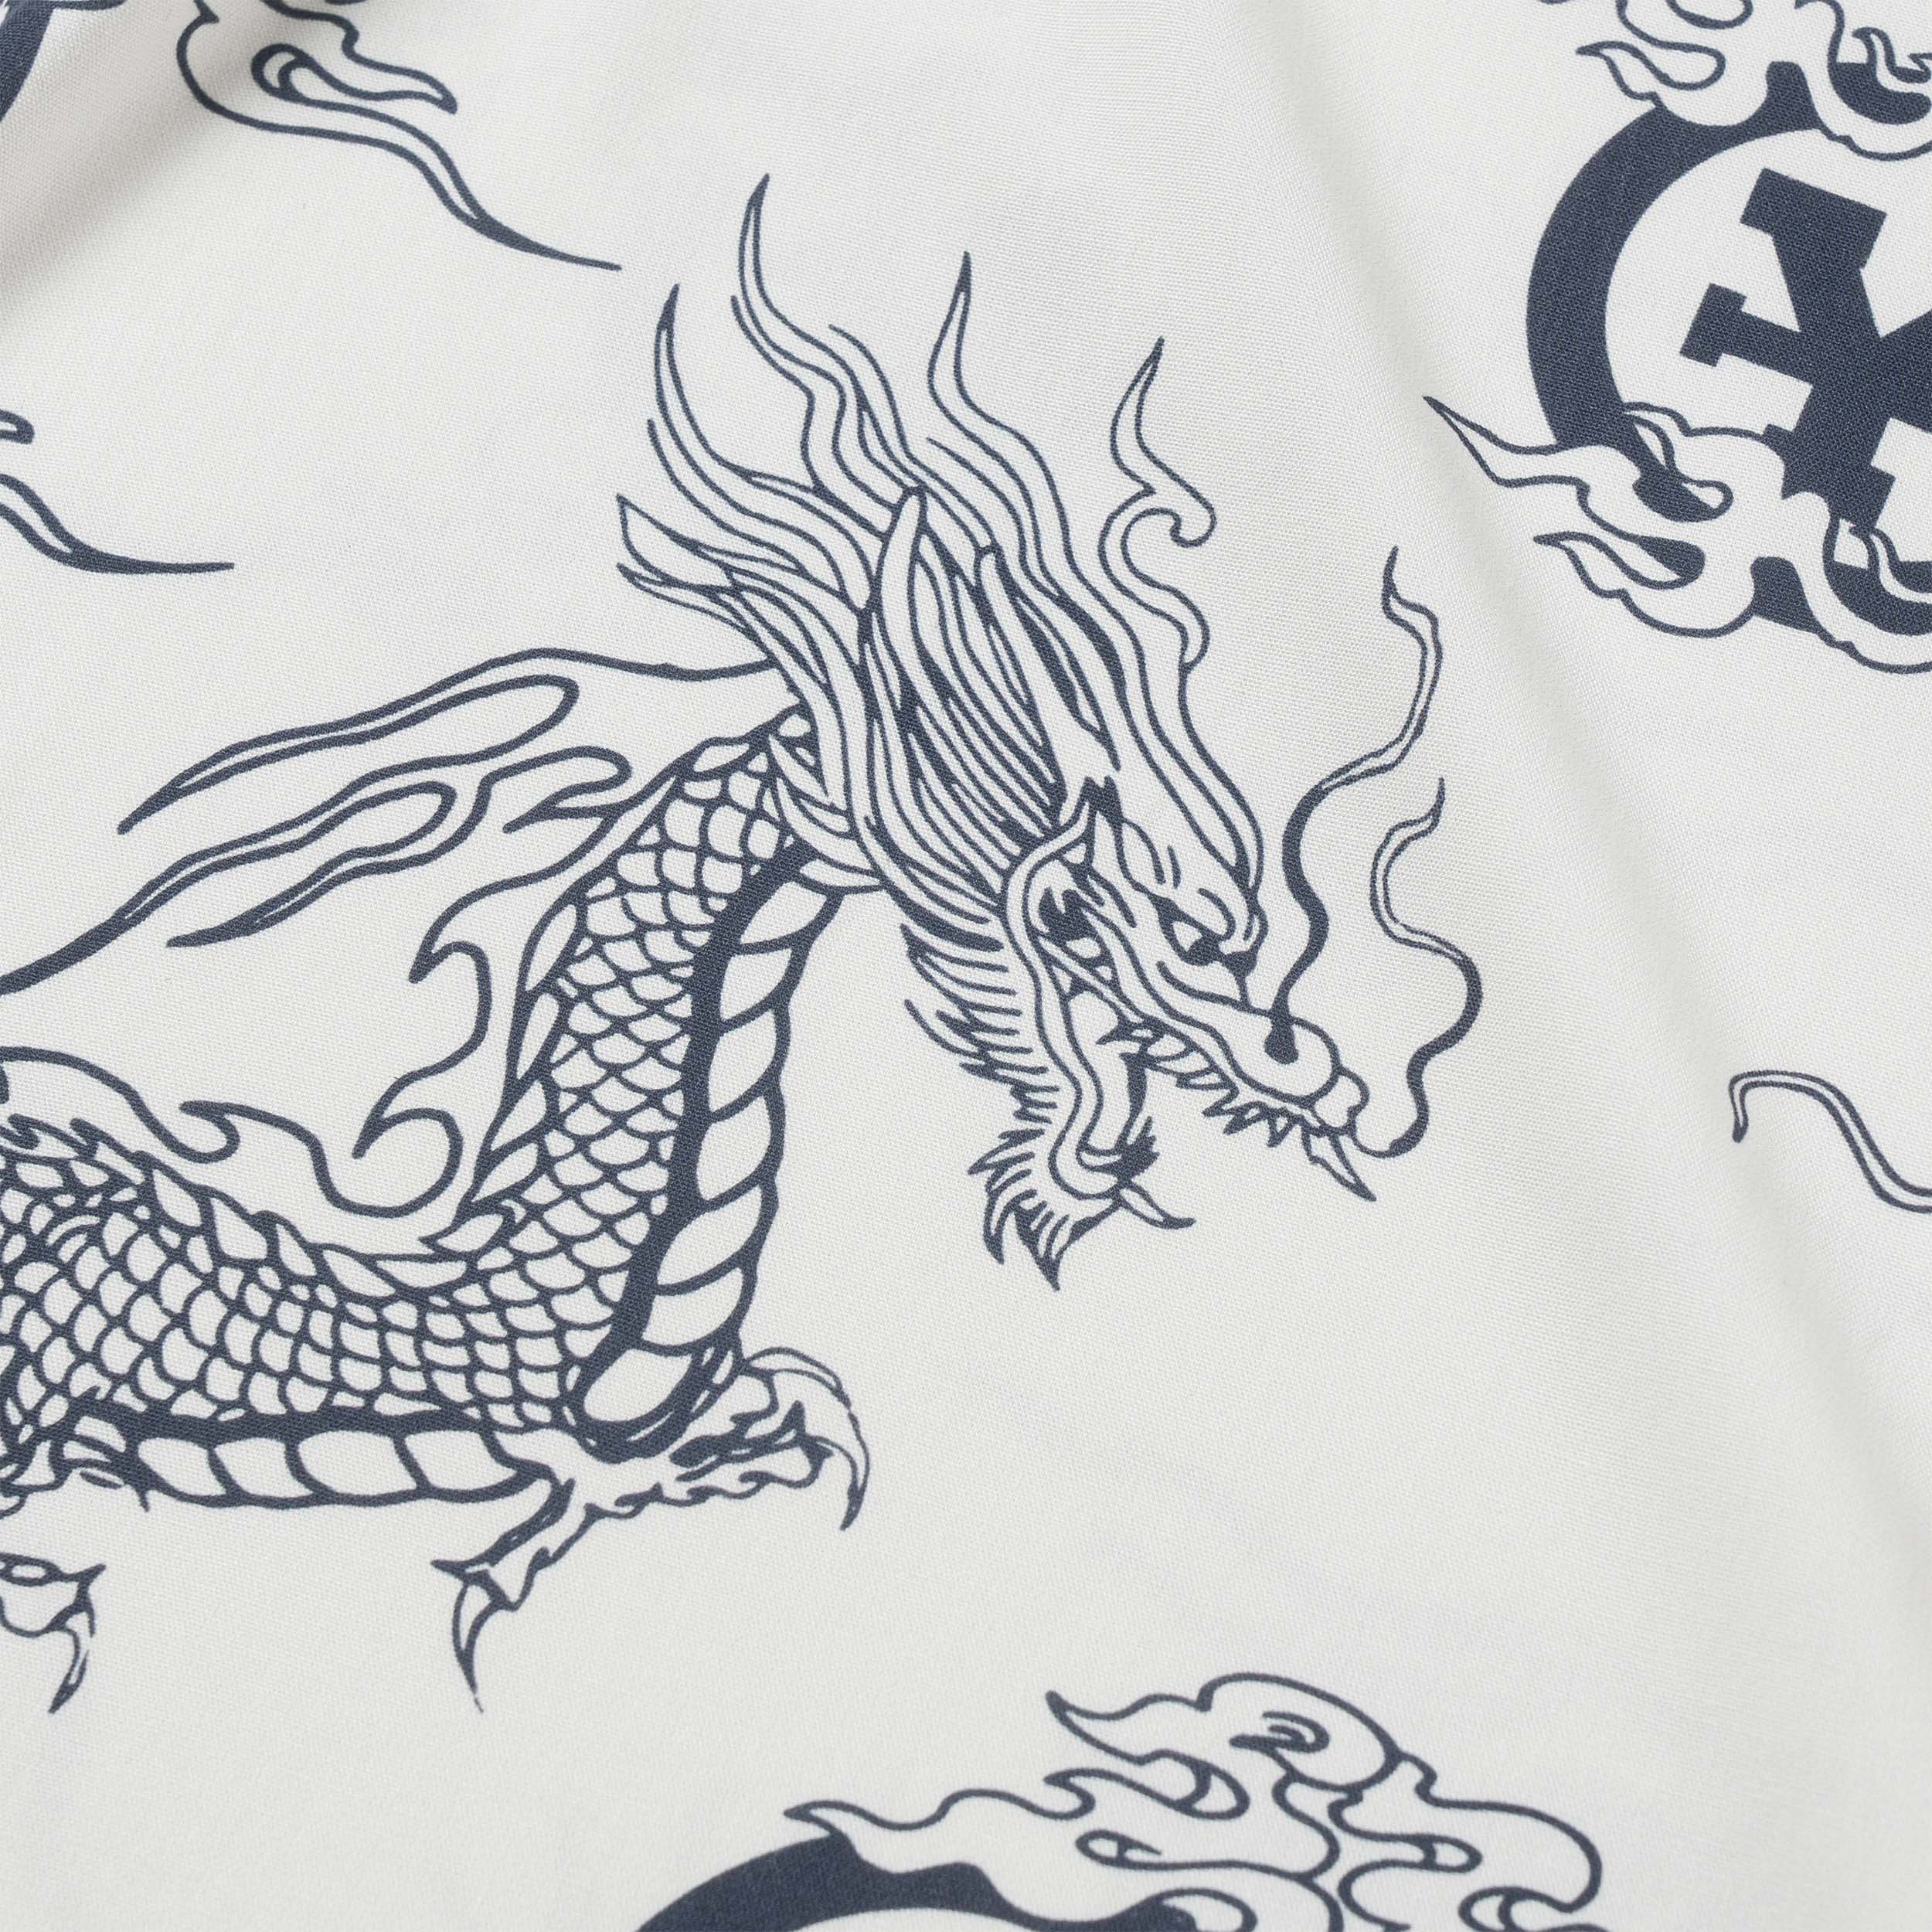 Dragon All Print Shirt - Cream